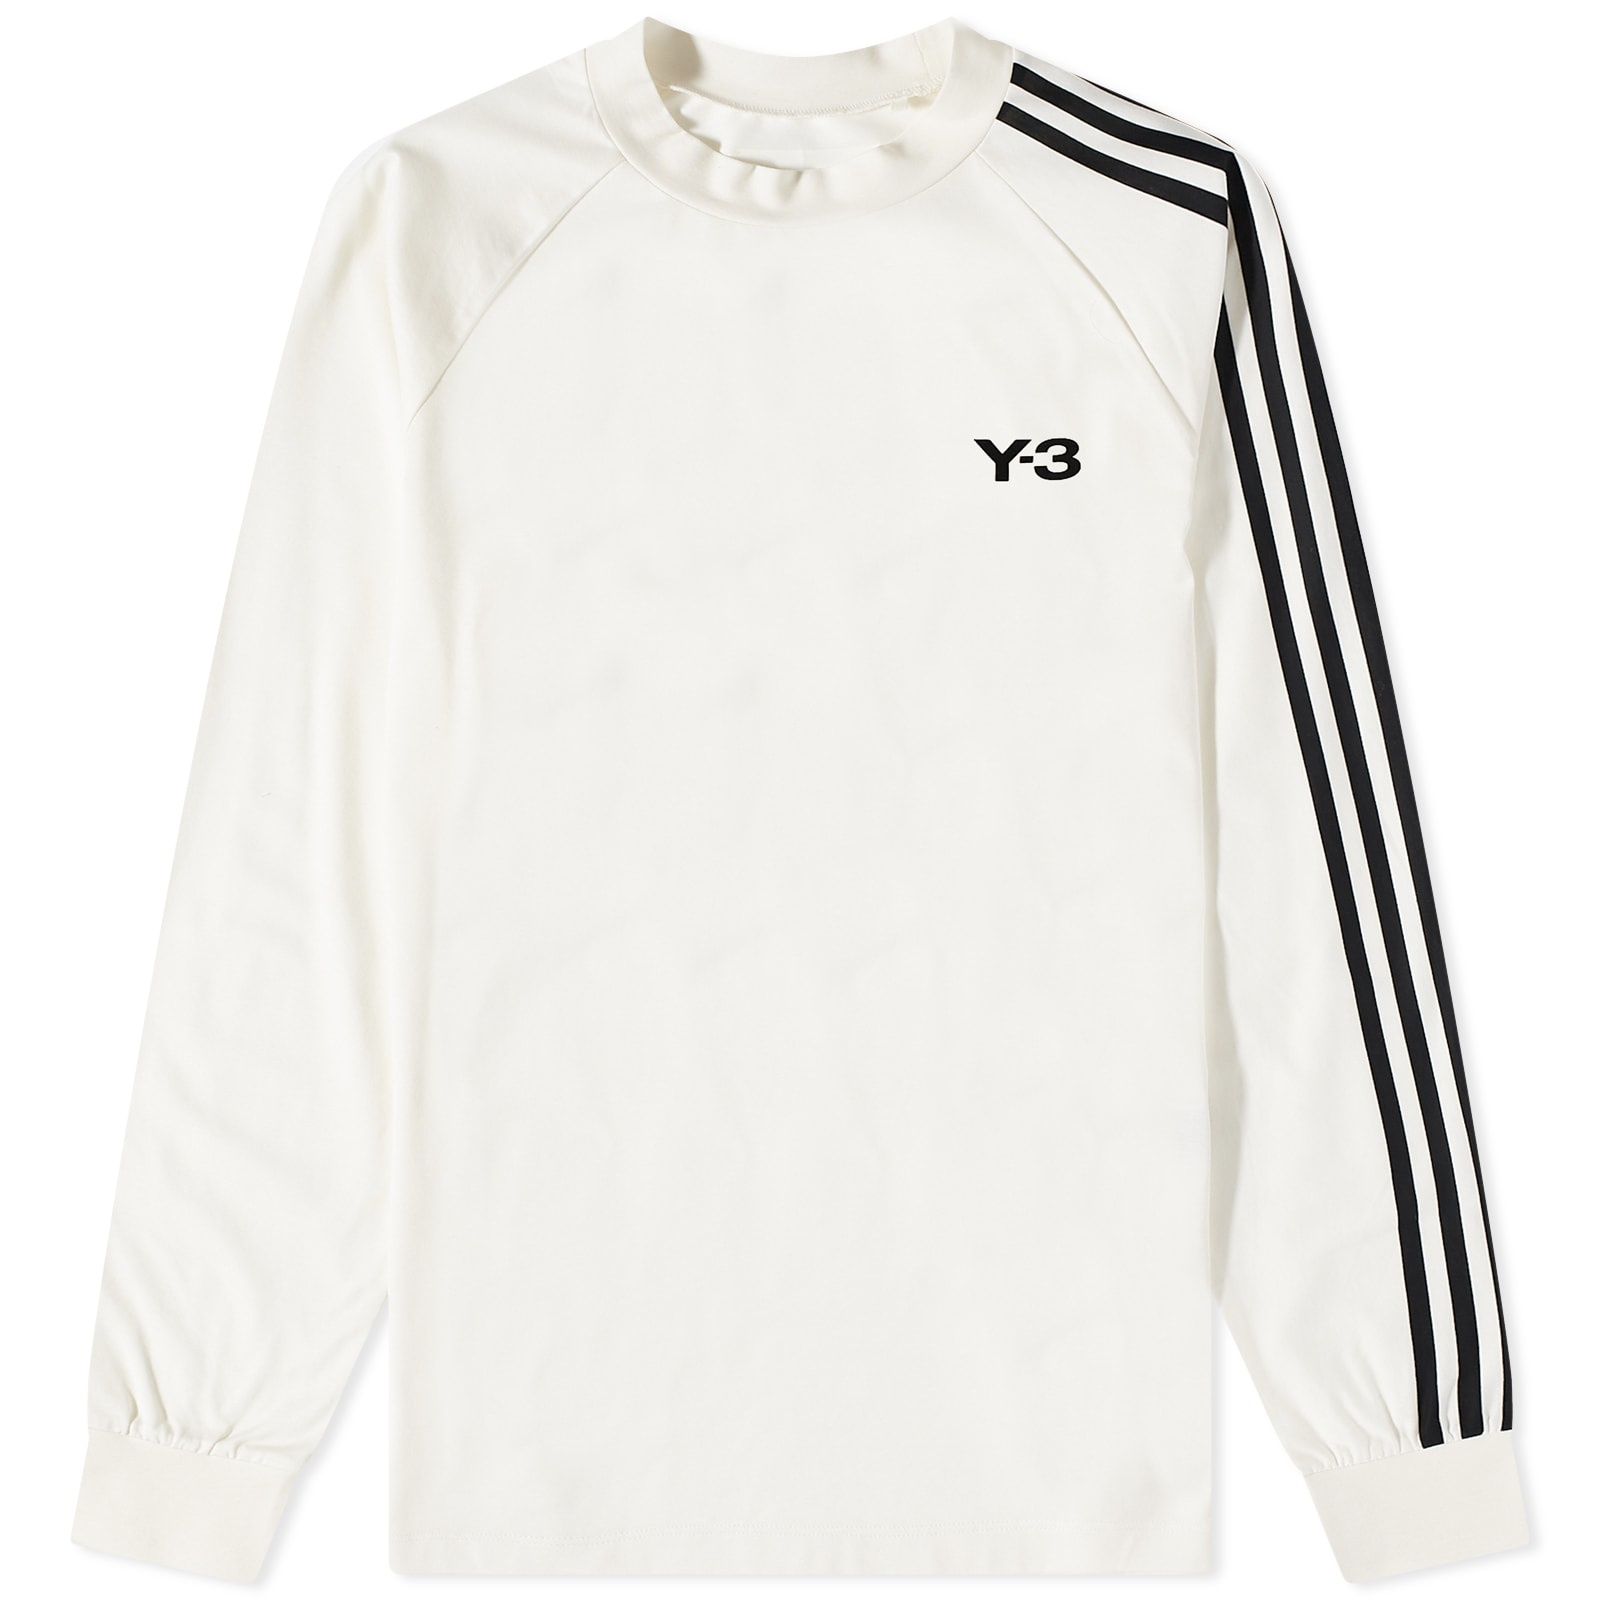 Y-3 3 Stripe Long Sleeve T-Shirt - 1